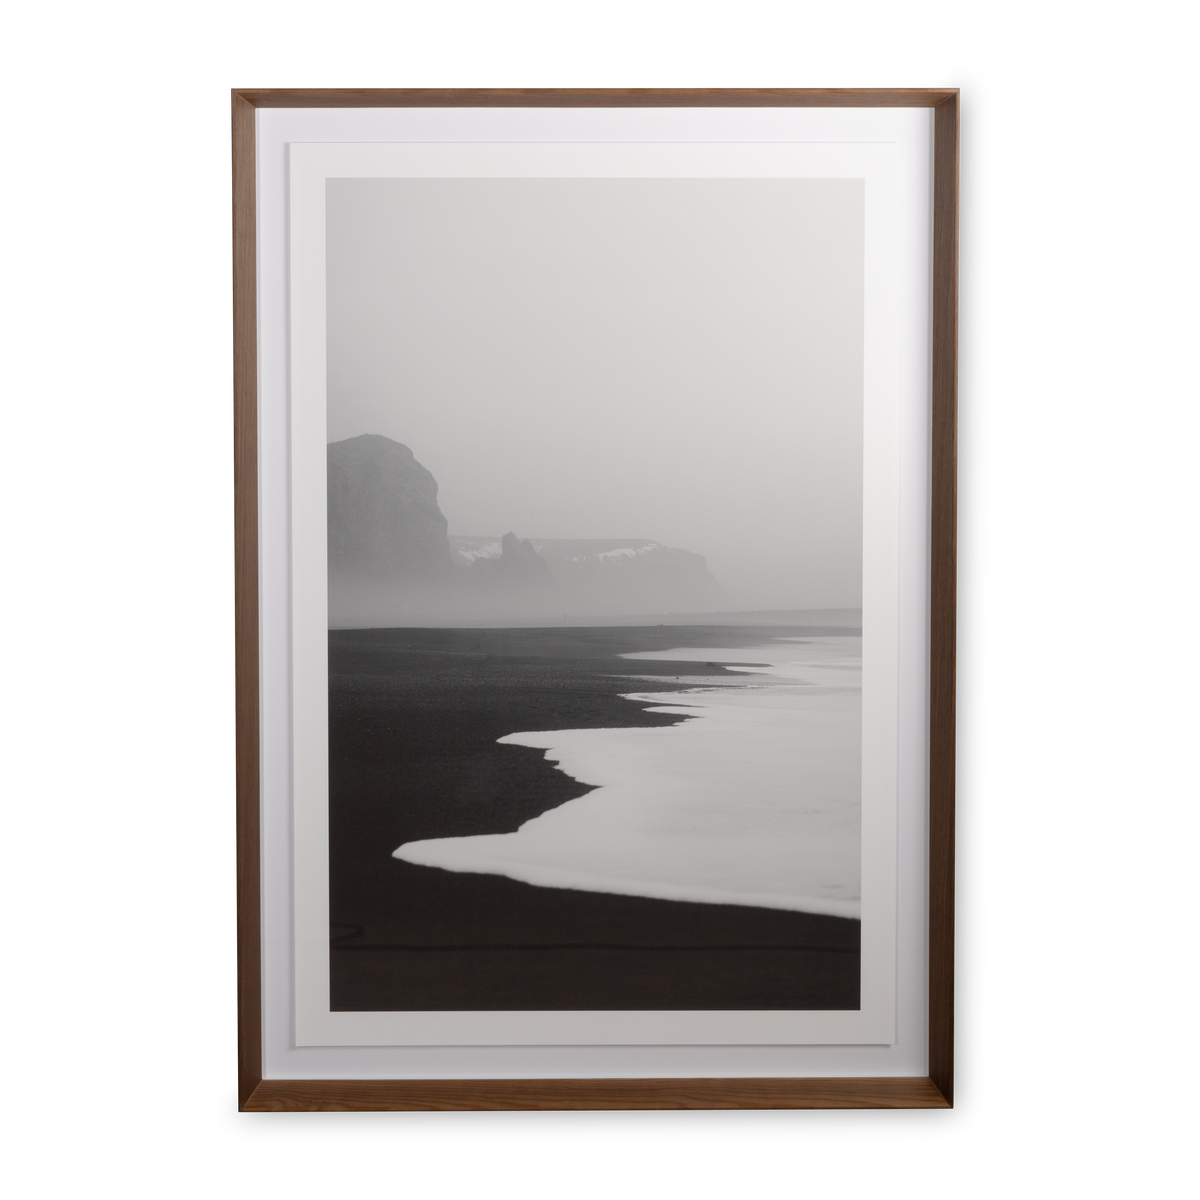 High resolution print framed under acrylic glass with a Danish walnut frame.